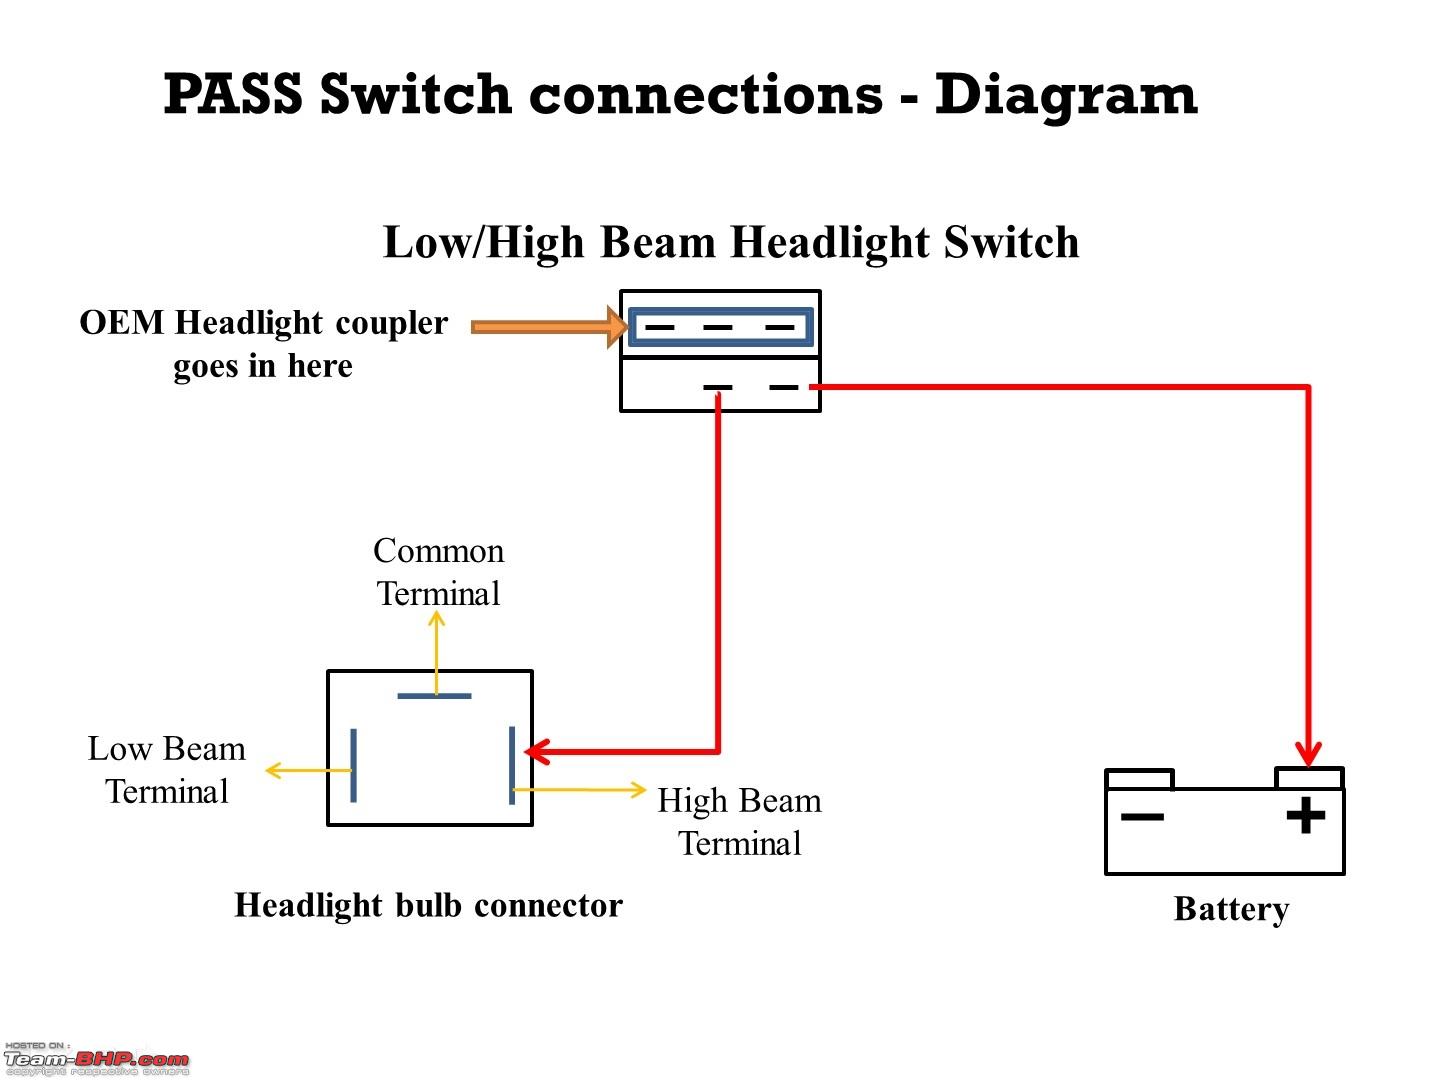 Honda Activa DIY: Adding a PASS switch - Team-BHP Fuse Box Wiring Diagram Team-BHP